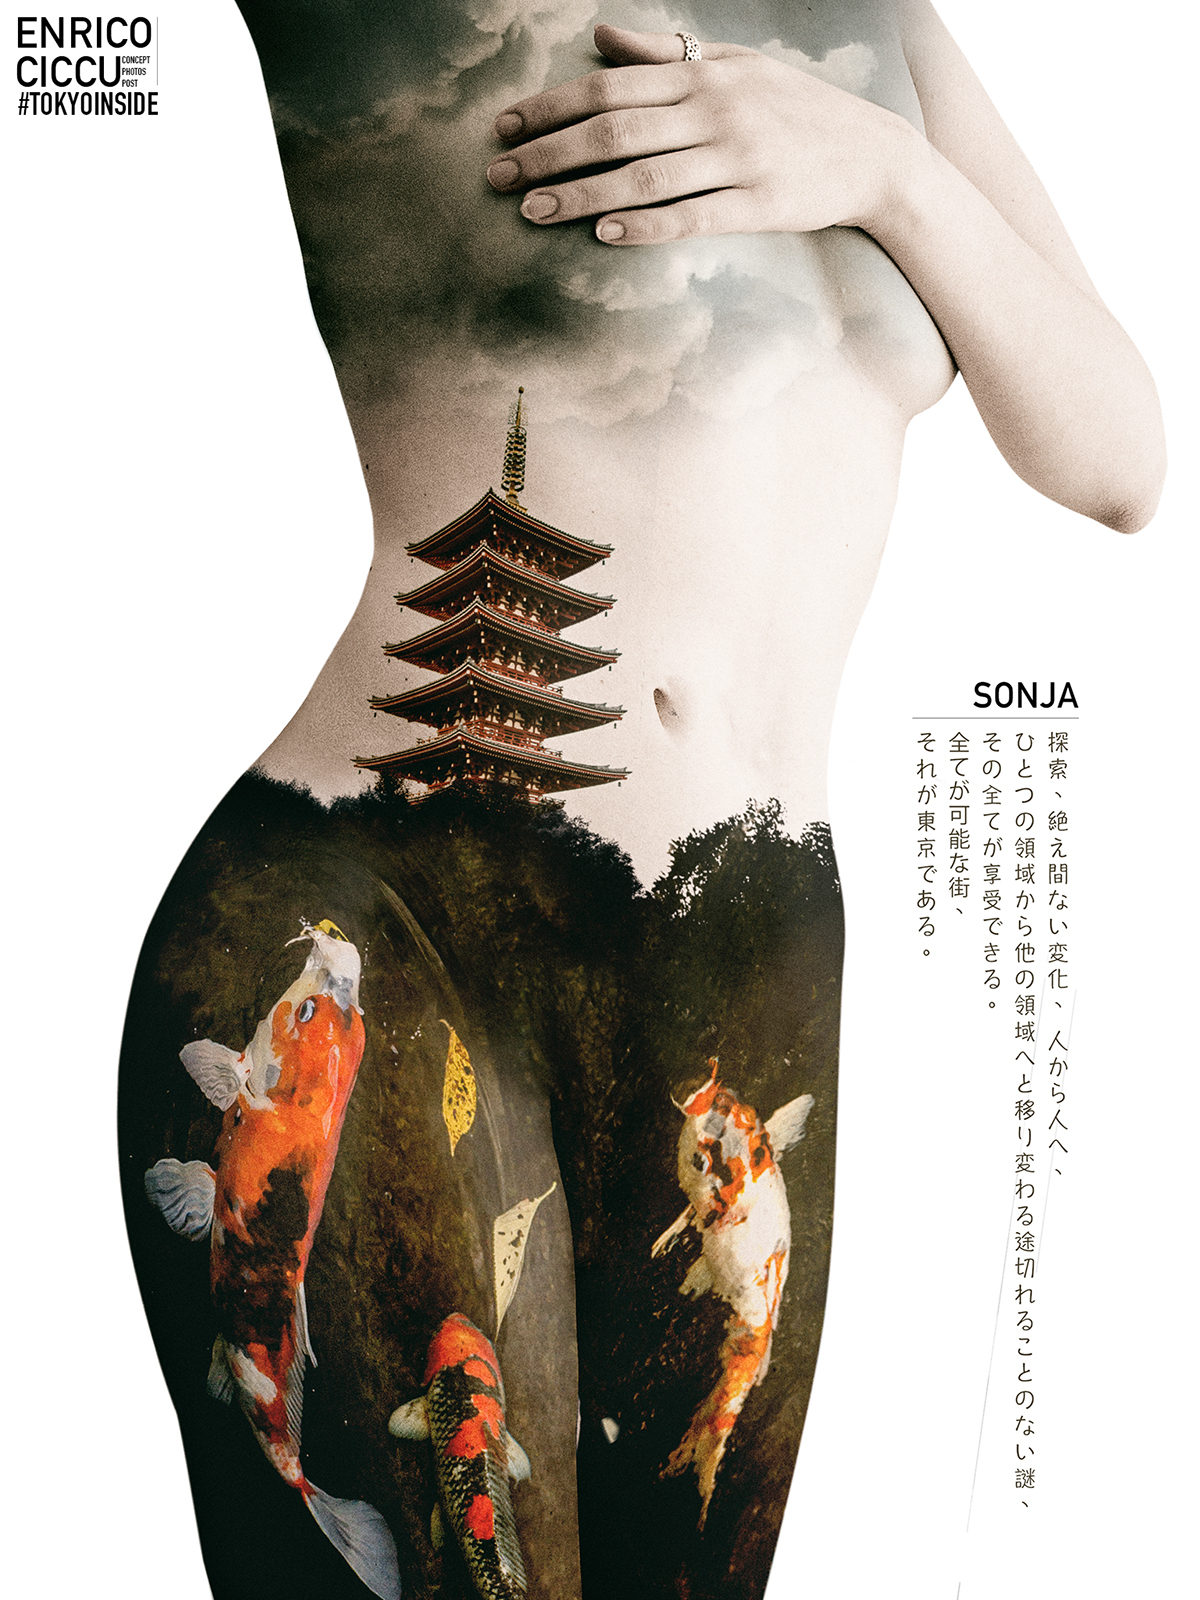 tokyo japan SHIBUYA koi art compositing design visual naked